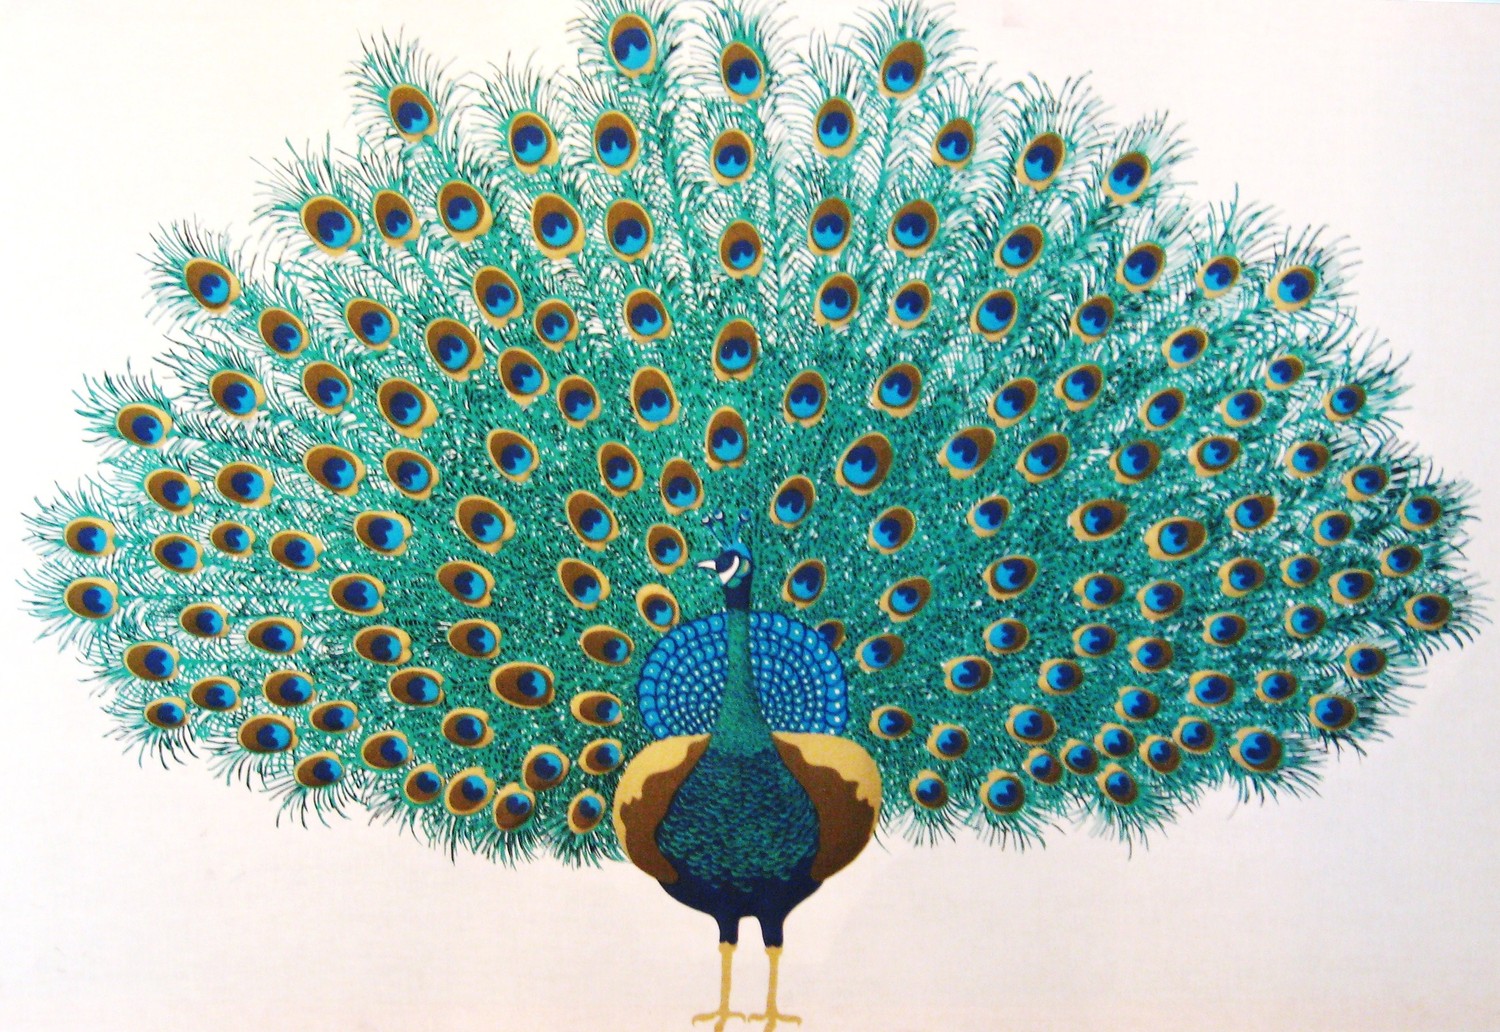 Peacock Wallpaper Art images